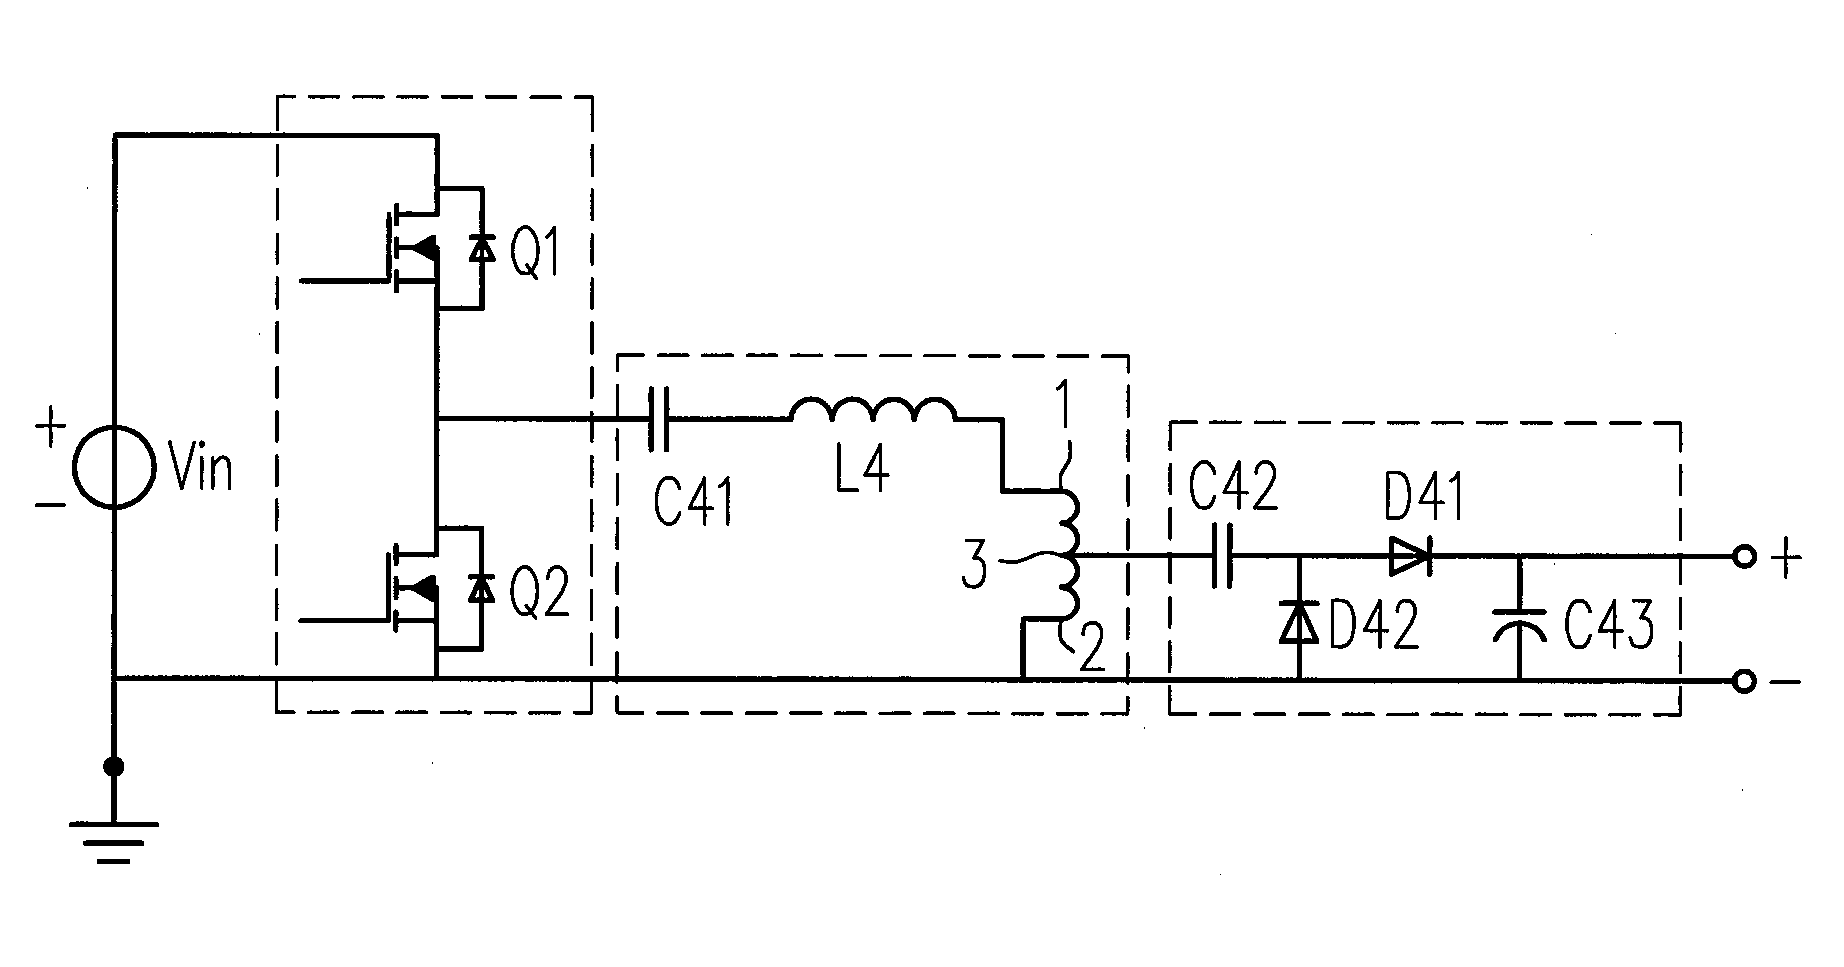 Non-isolated resonant converter